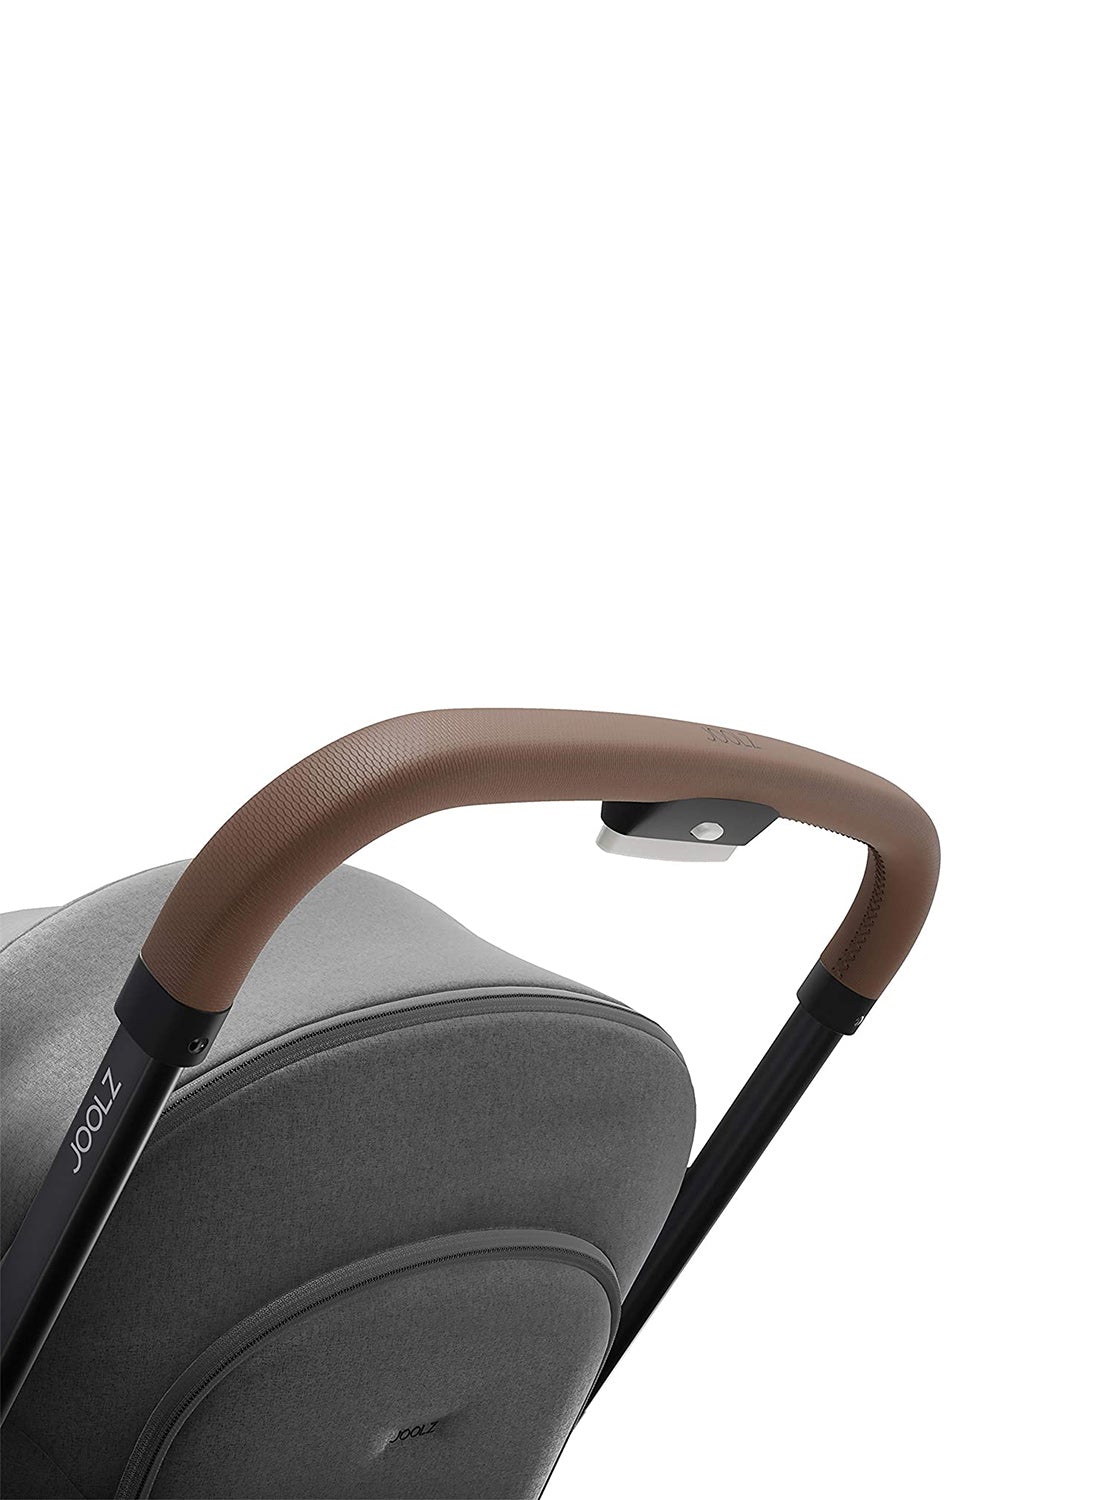 JOOLZ Aer Ultimate Lightweight Luxury Stroller - ANB Baby -$300 - $500